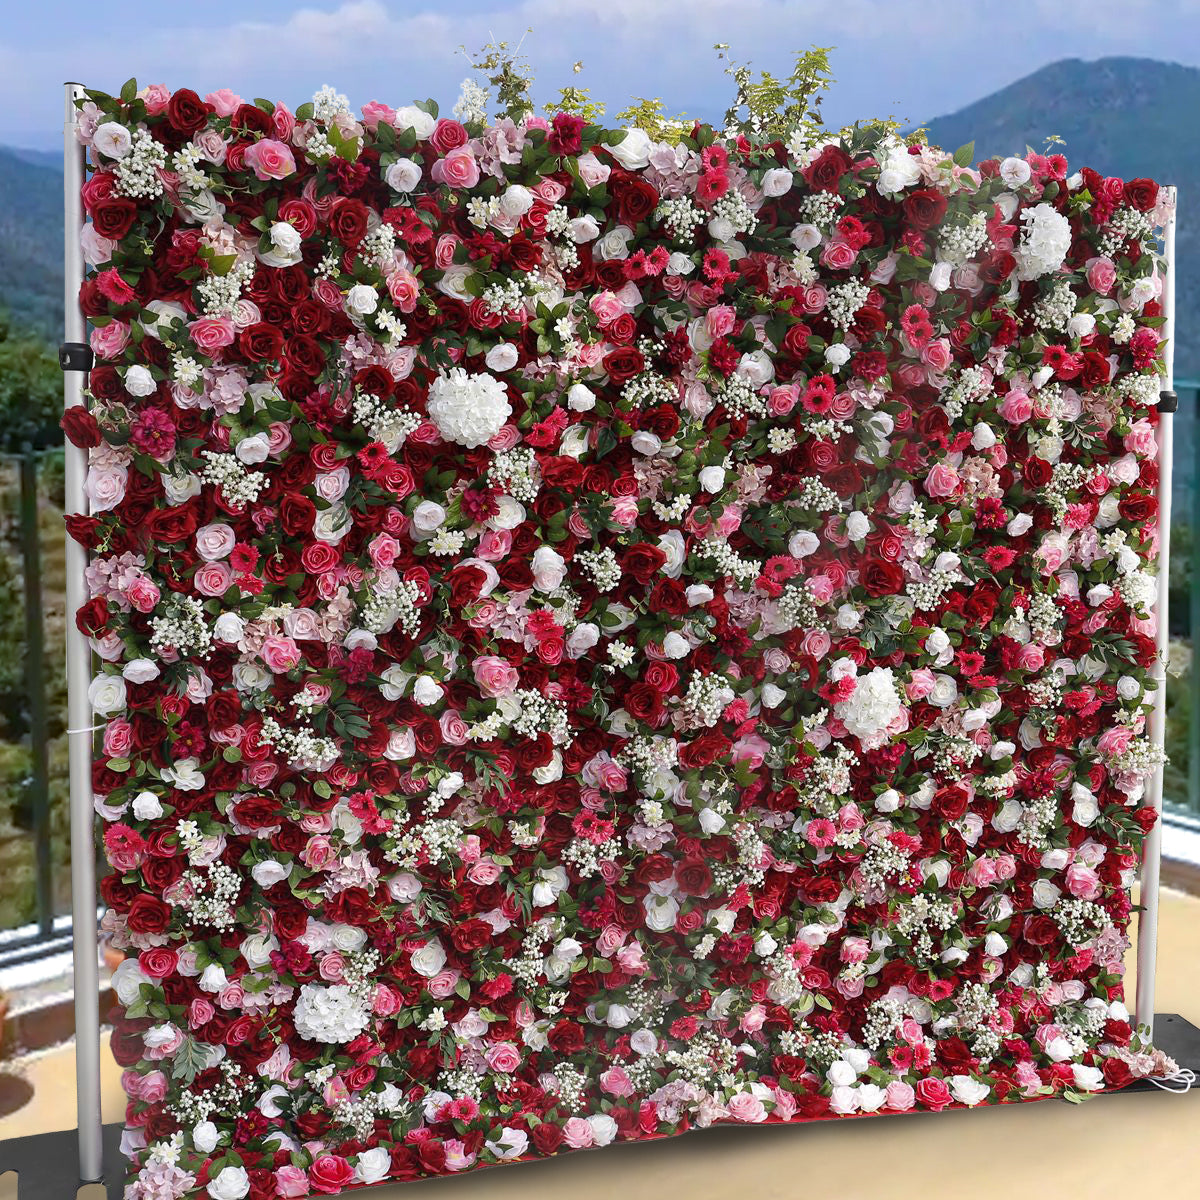 3D Artificial Flower Wall Arrangement Wedding Party Birthday Backdrop Decor HQ9041